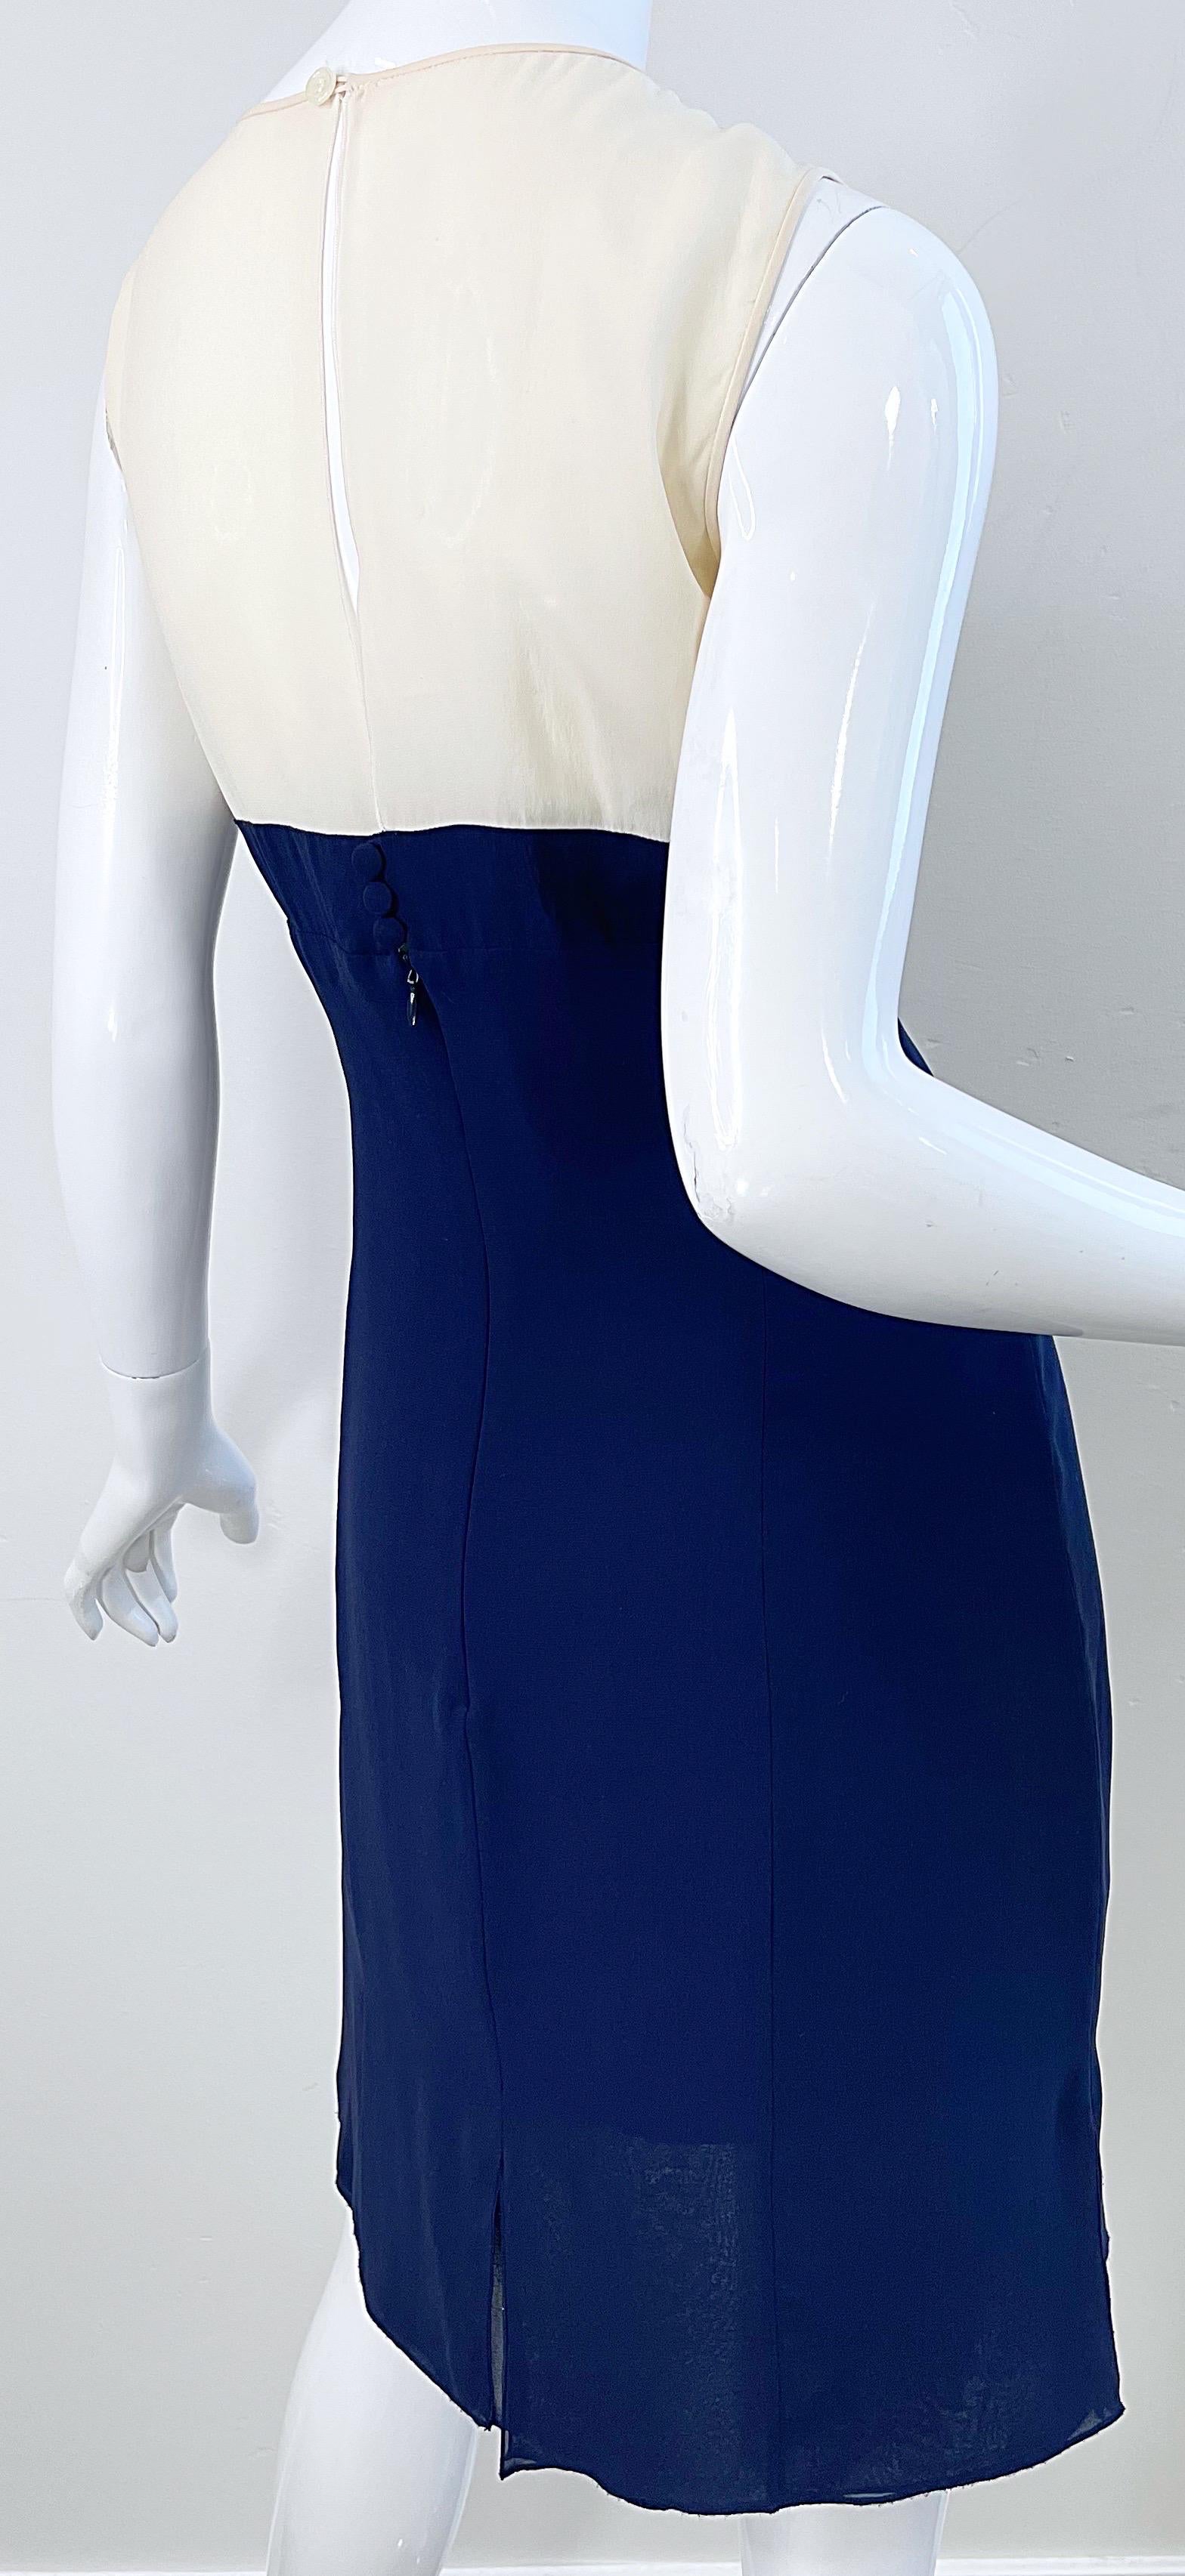 Karl Lagerfeld 1980s Size 44 / US 10 Navy Blue Silk Chiffon Vintage 80s Dress For Sale 1